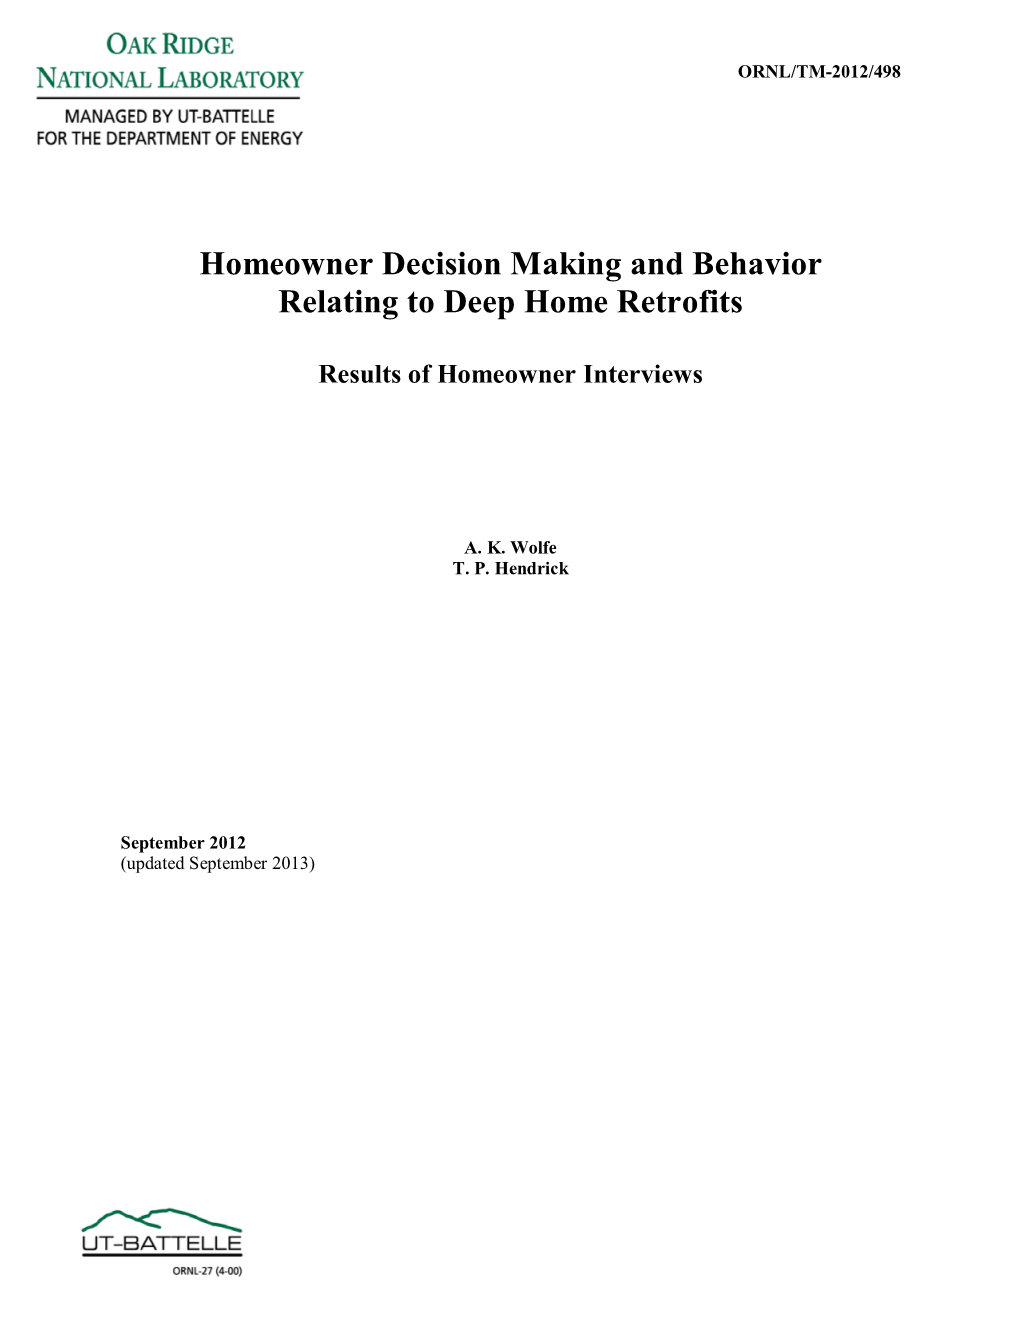 Homeowner Decision Making and Behavior Relating to Deep Home Retrofits